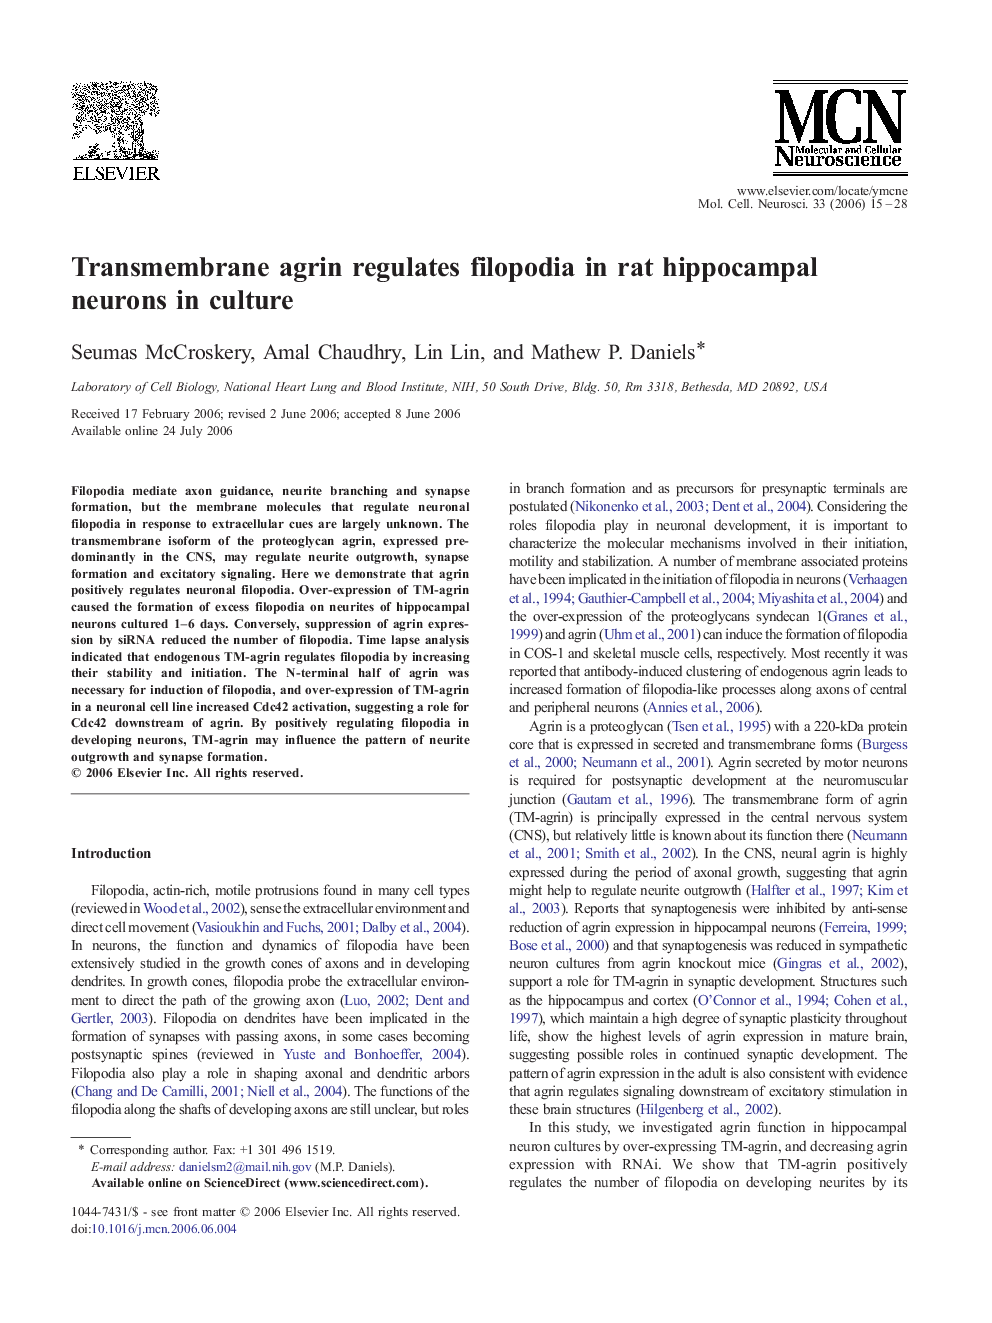 Transmembrane agrin regulates filopodia in rat hippocampal neurons in culture